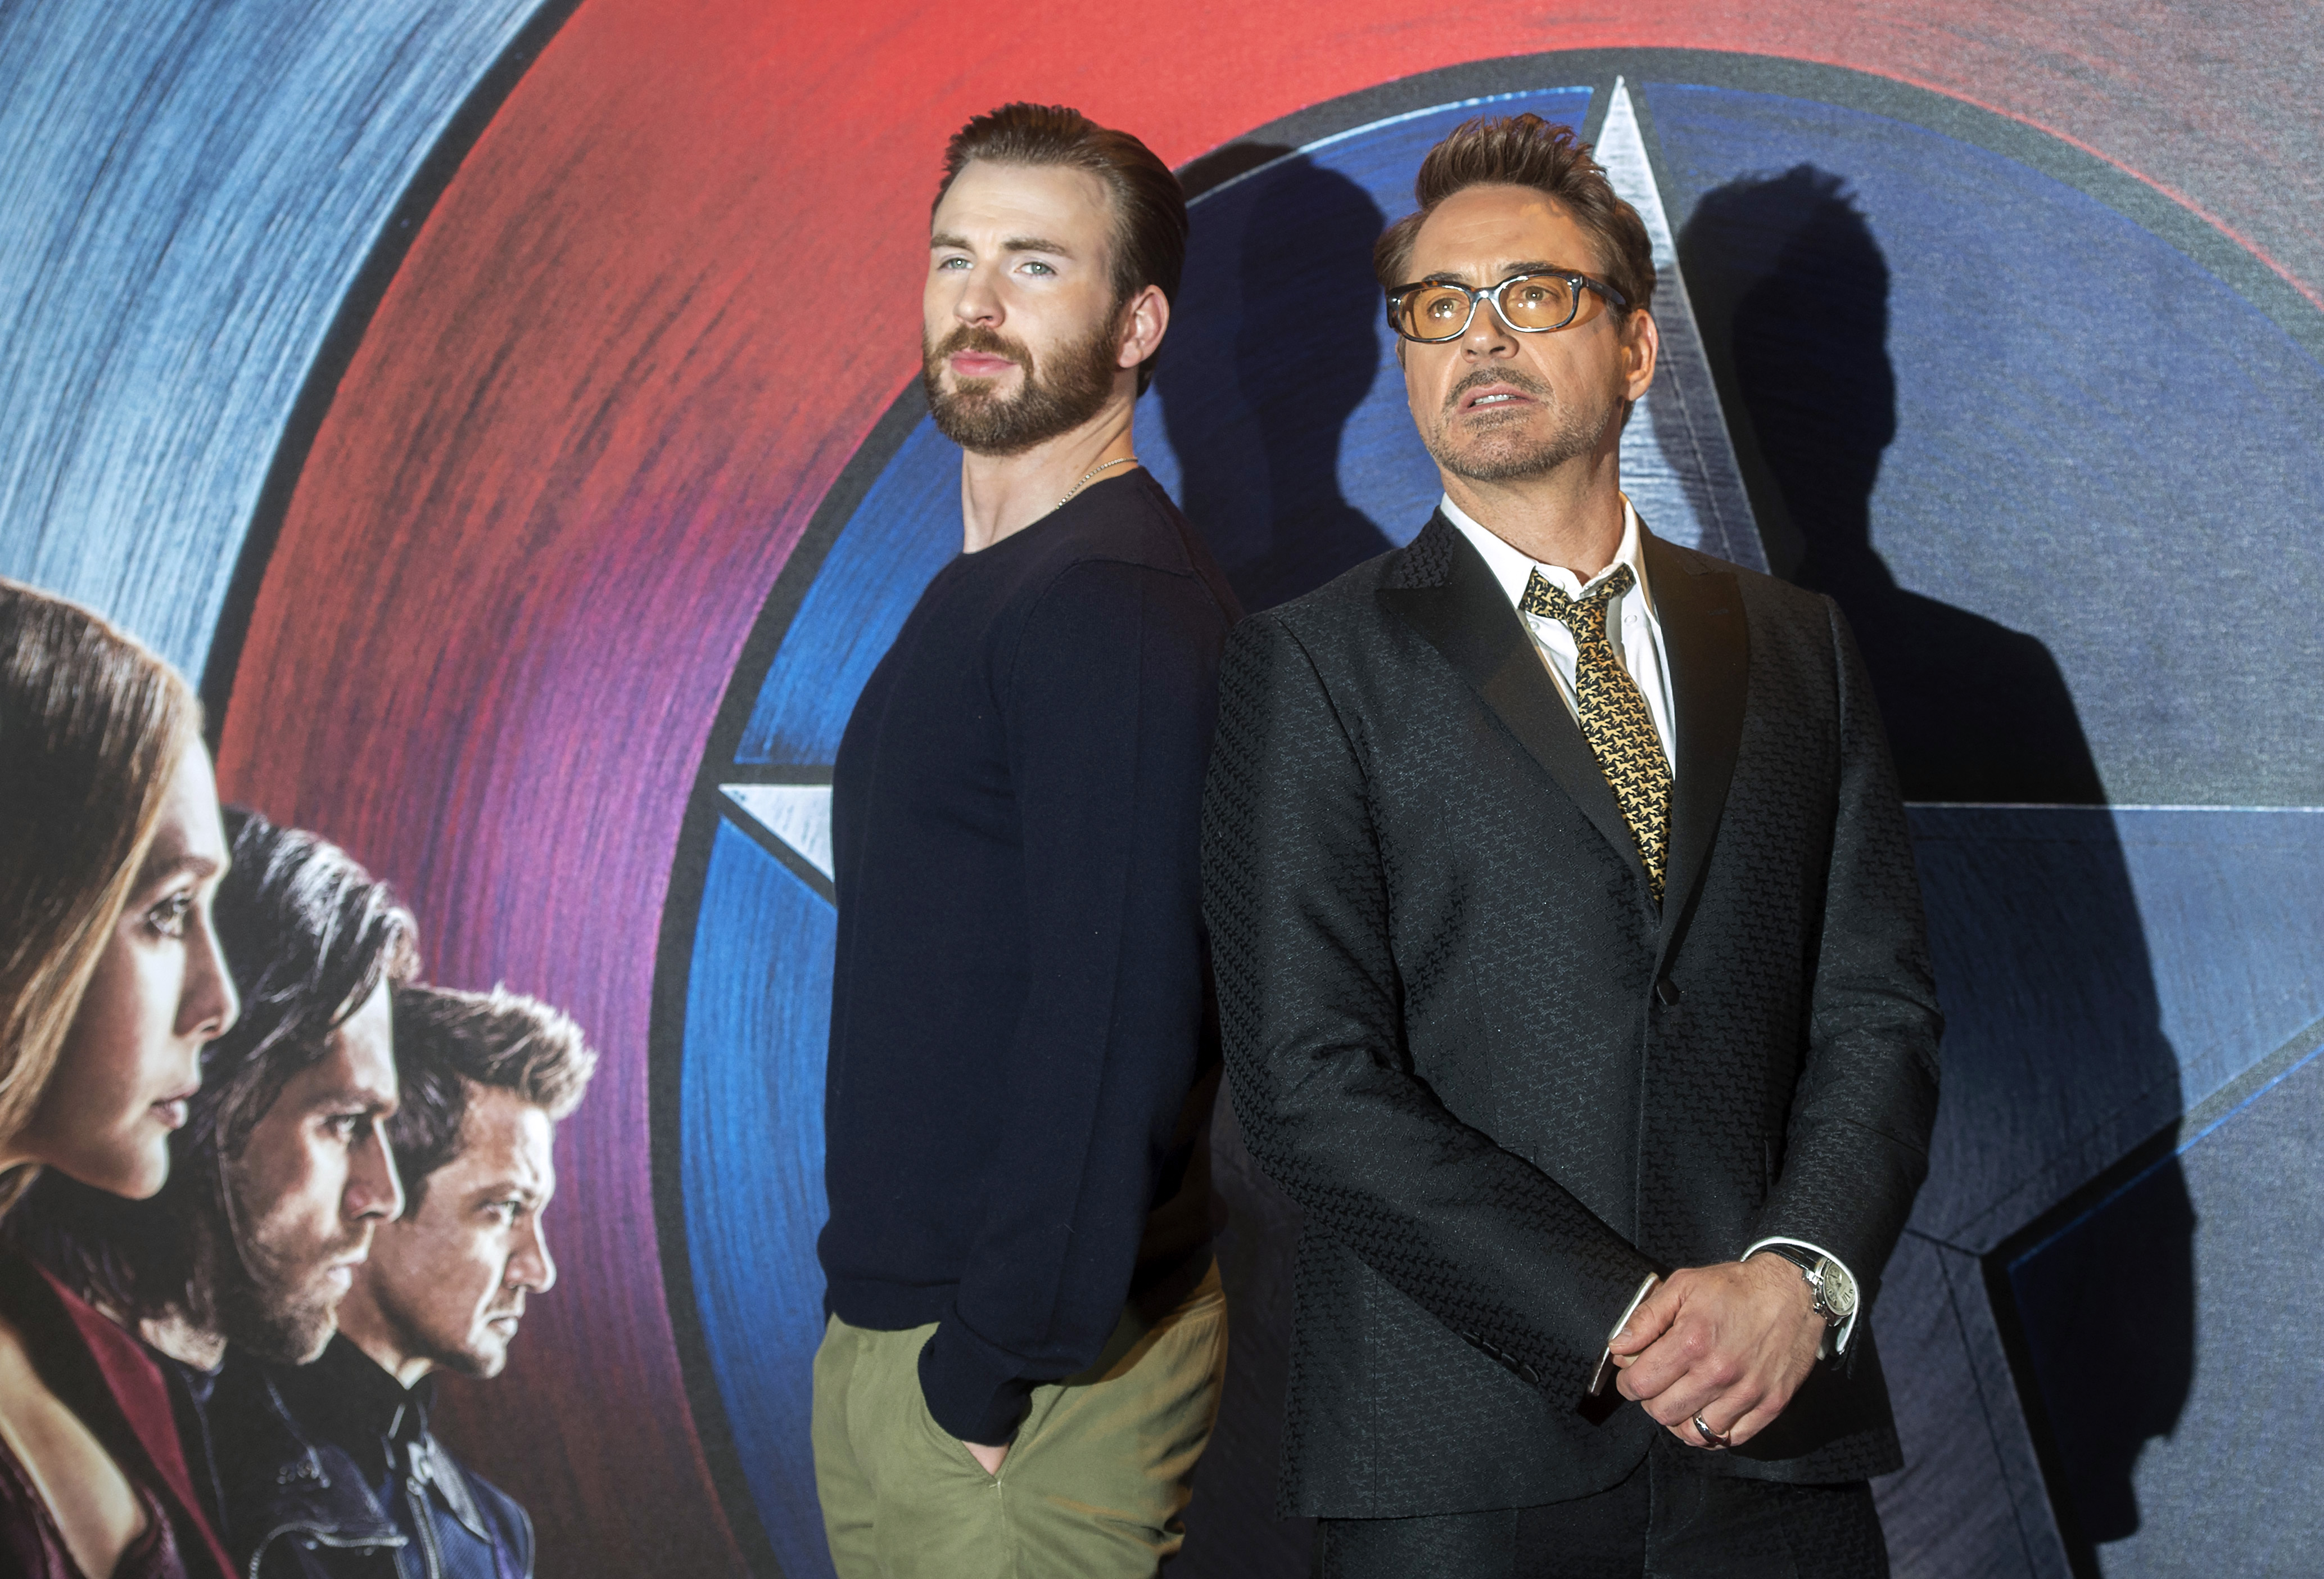 #TEAMCAP OR #TEAMIRONMAN? Chris Evans and Robert Downey Jr in London promoting 'Captain America: Civil War.' Photo by Hannah McKay/EPA 